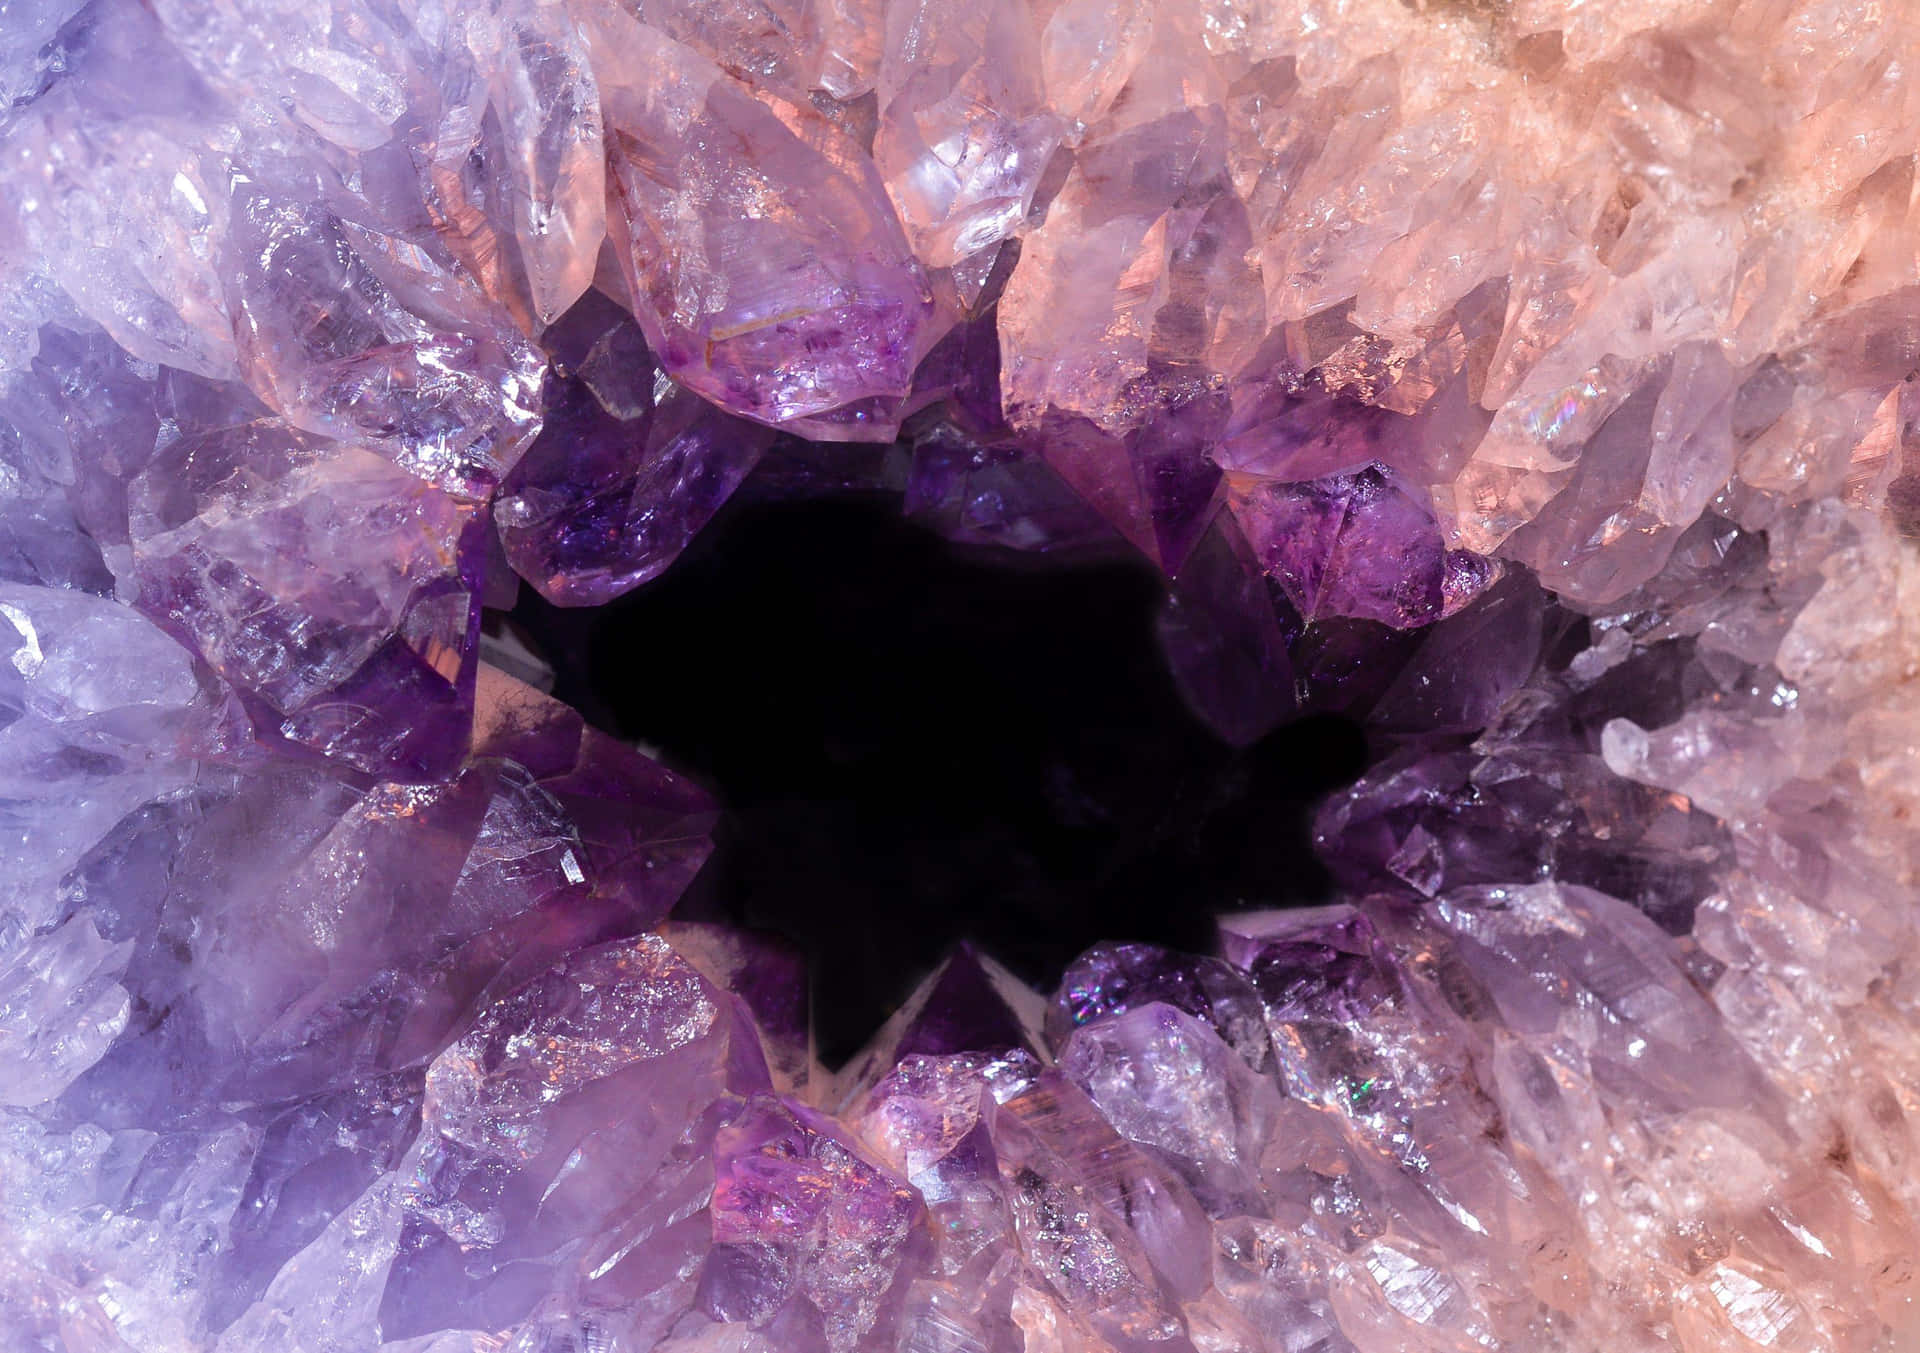 Stunning Amethyst Crystal Formation